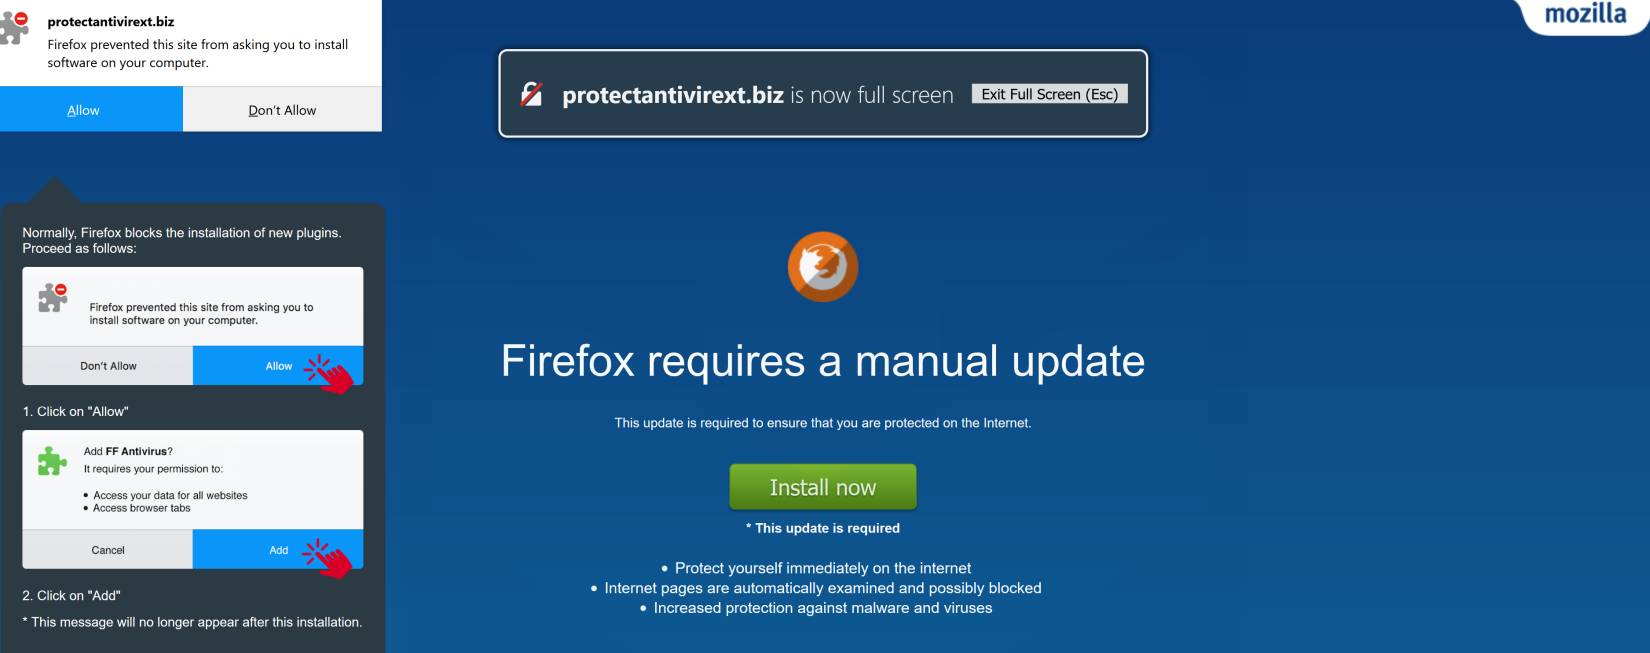 firefox update download window